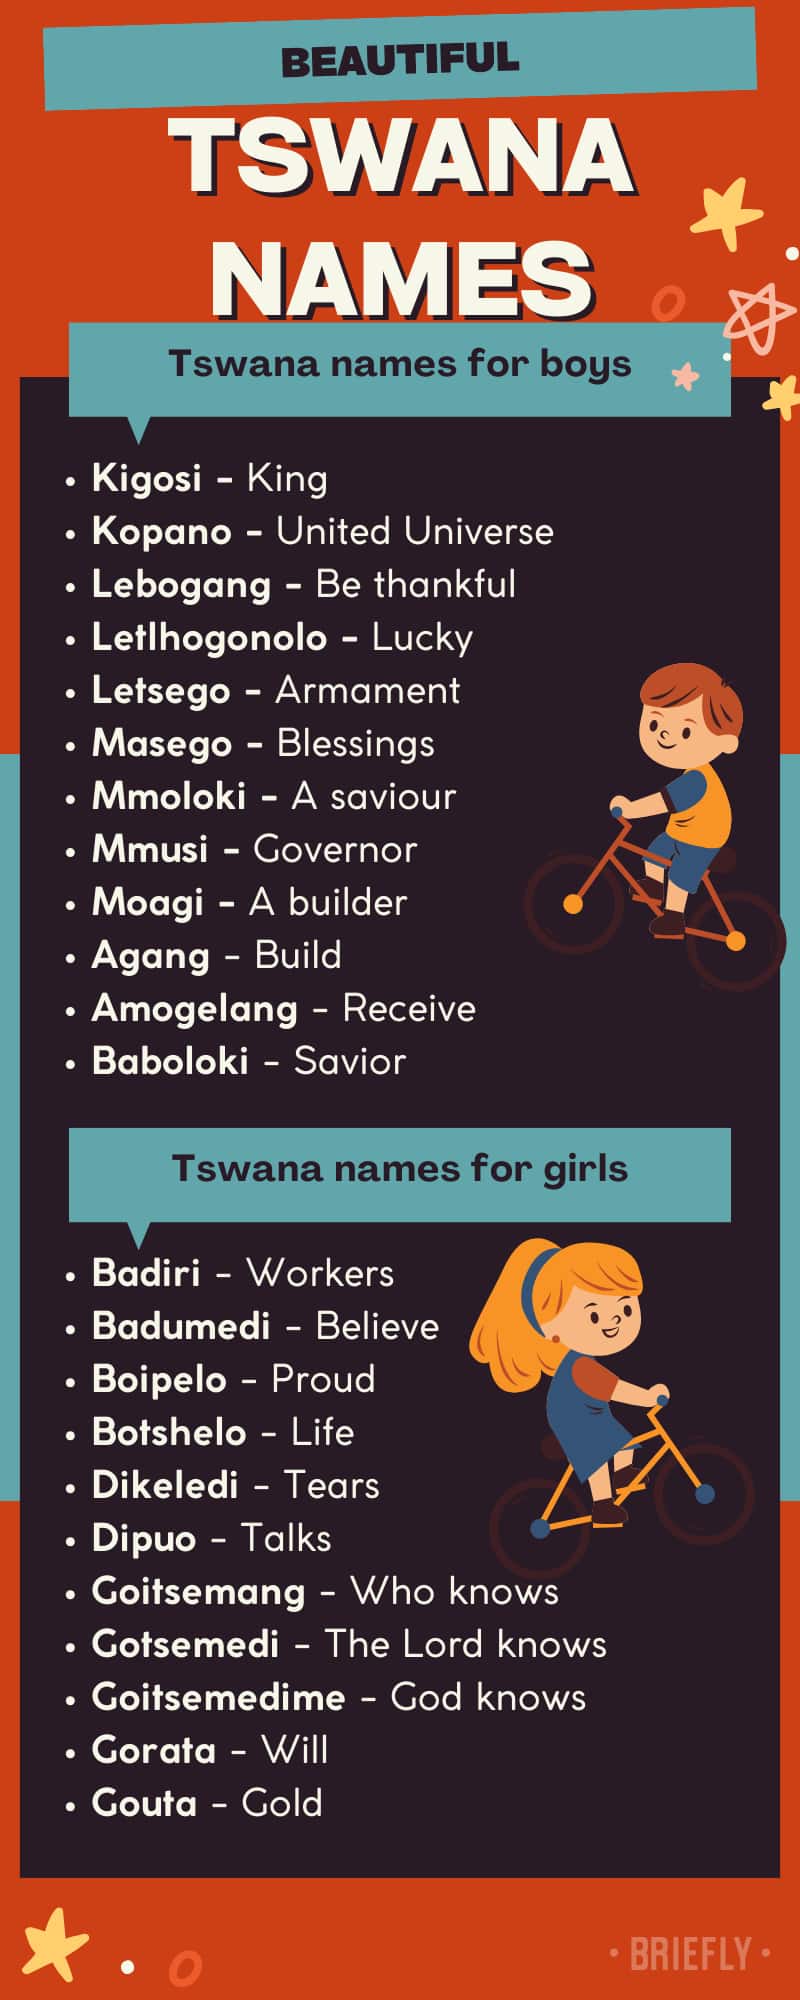 Tswana names for boys and girls